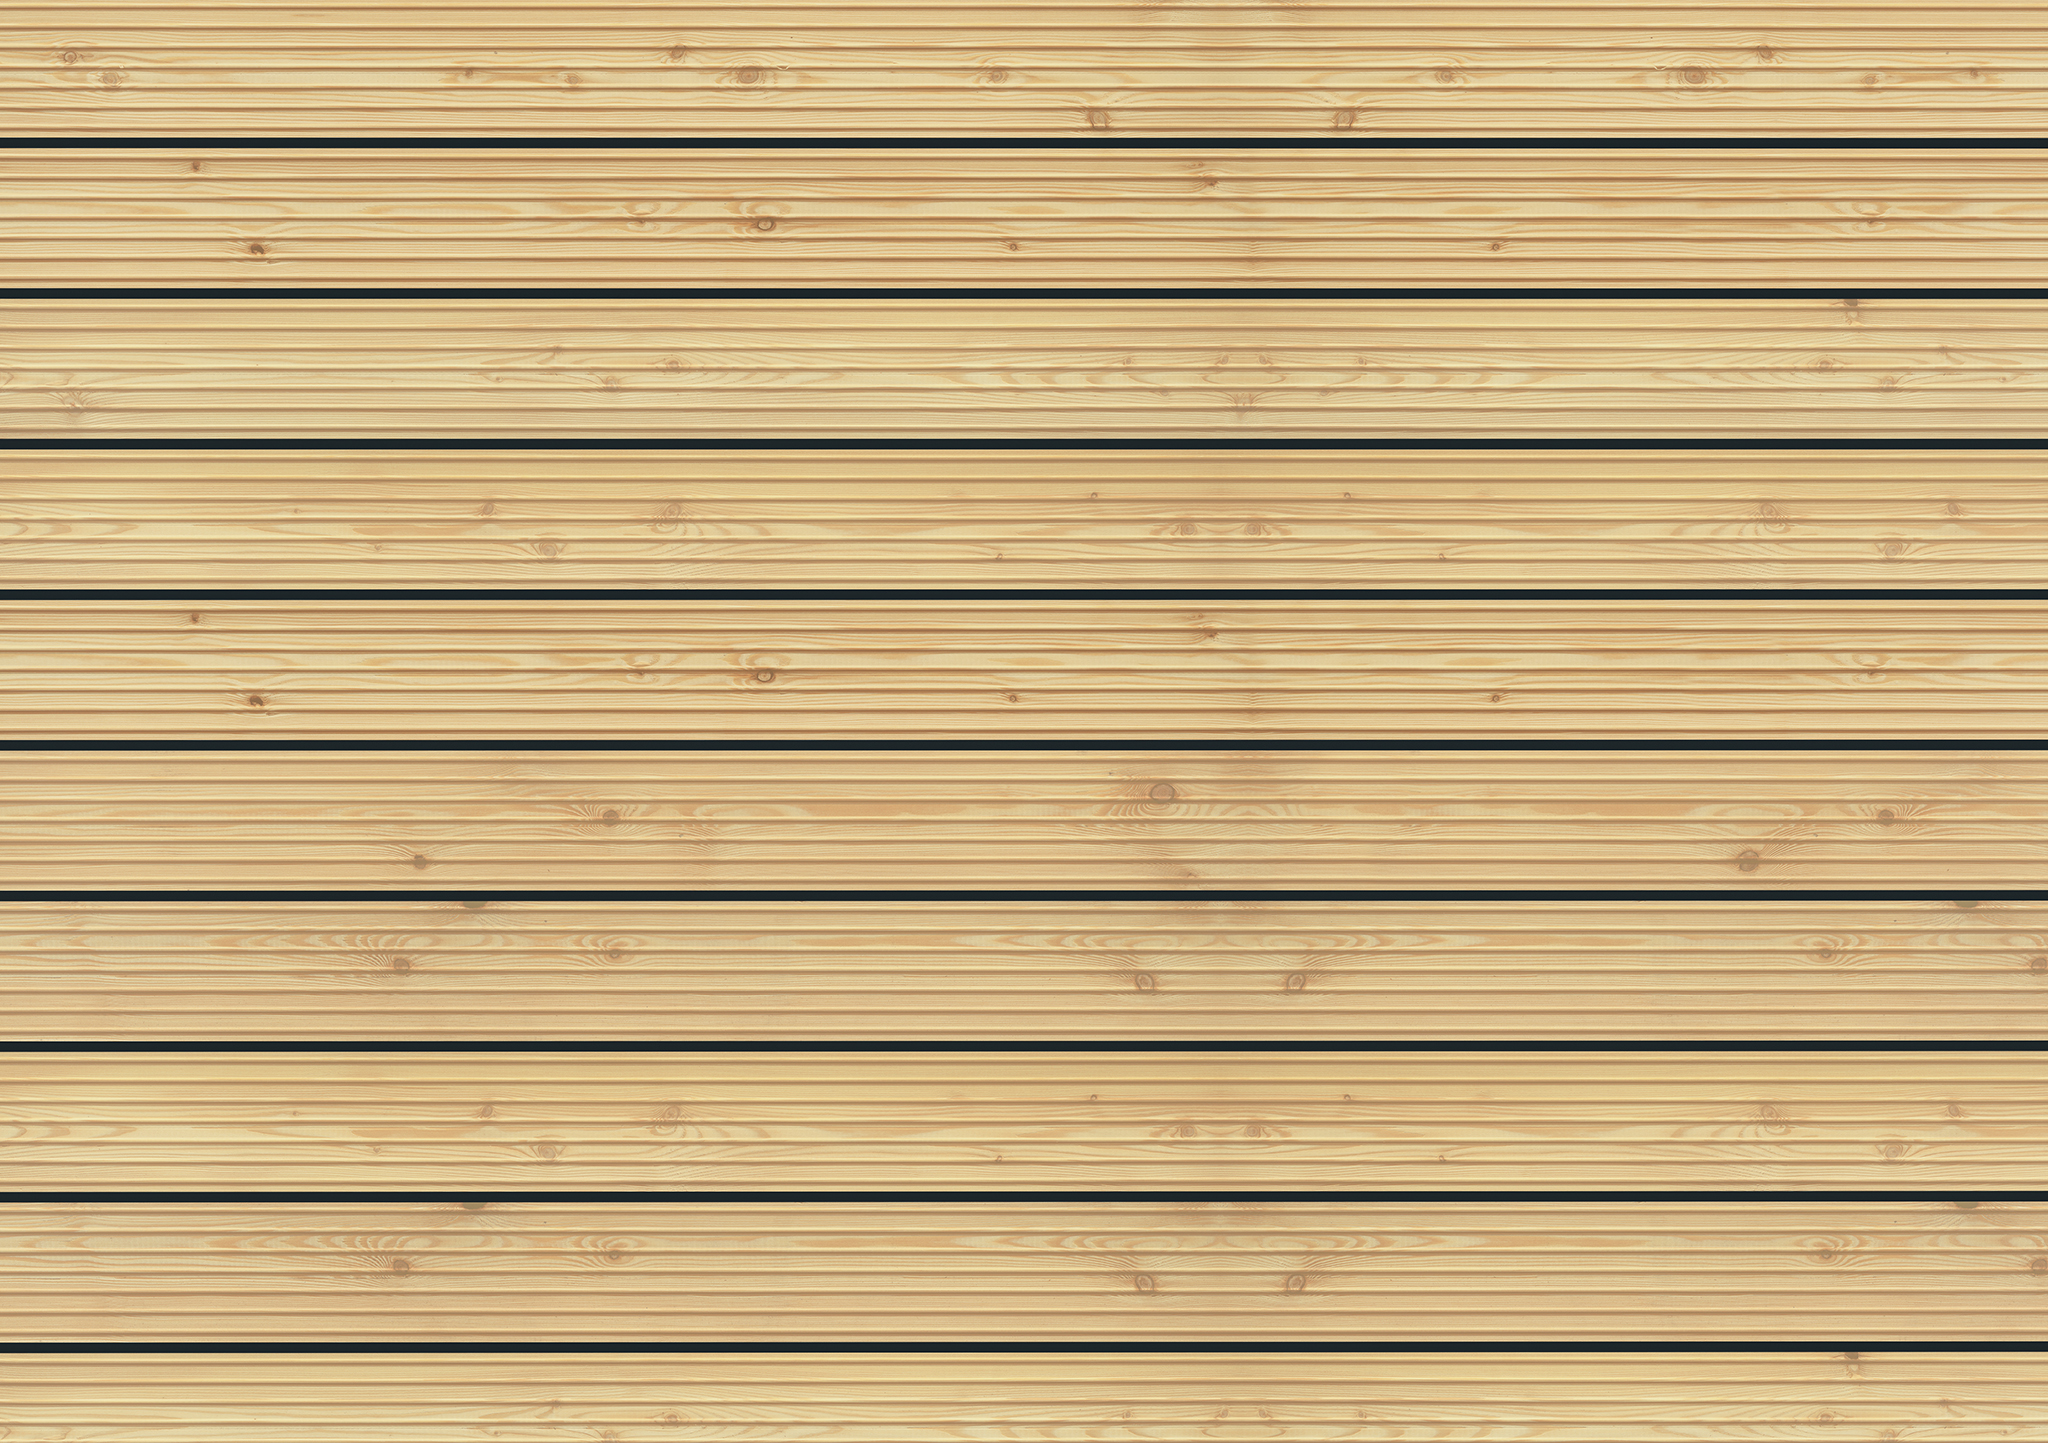 PARAT Deck sib. Larch decking board